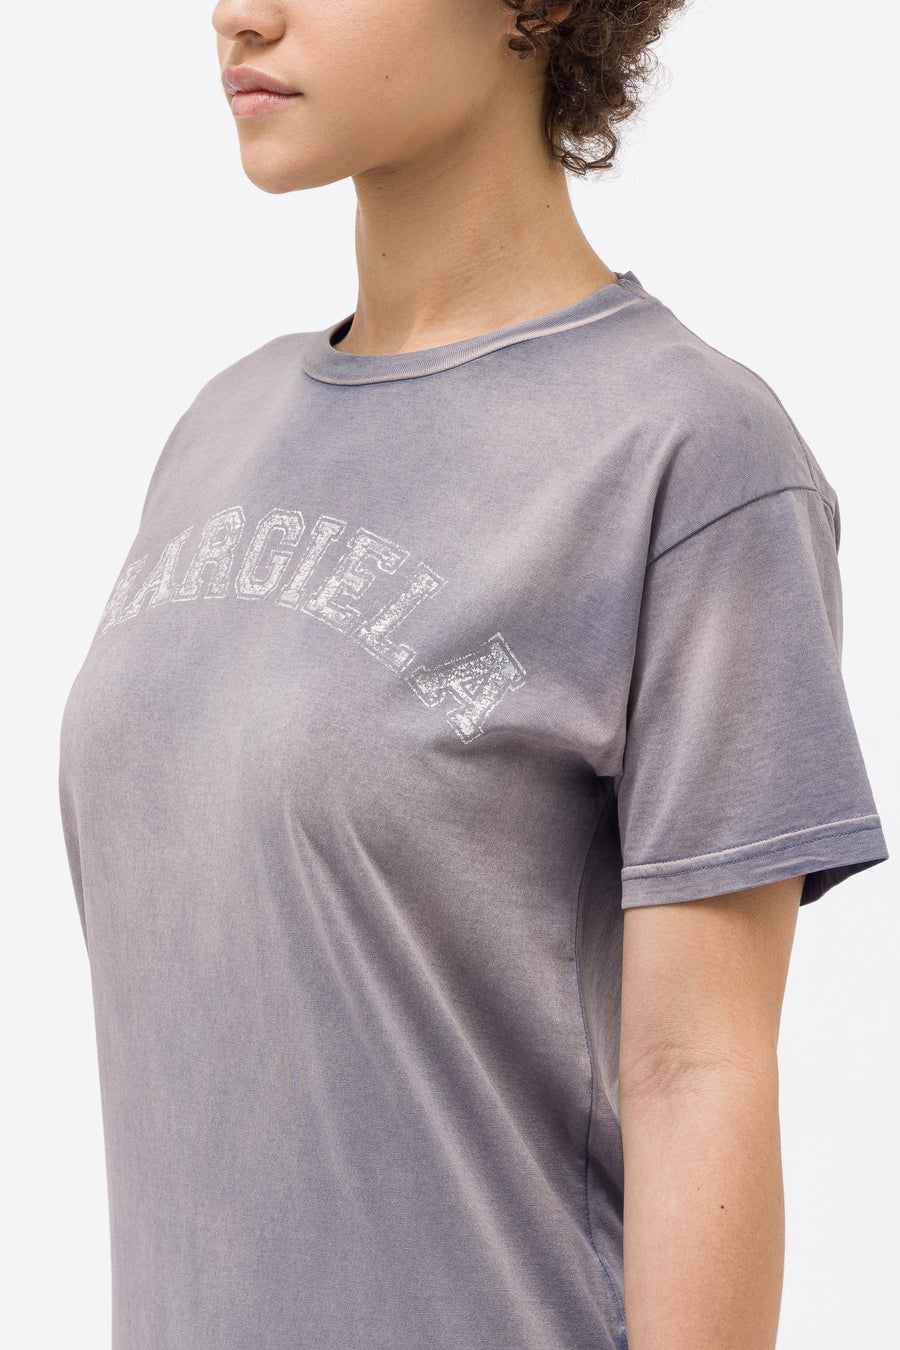 rand baan Identiteit Maison Margiela - Women's Logo Heavy T-Shirt in Lilac - Notre